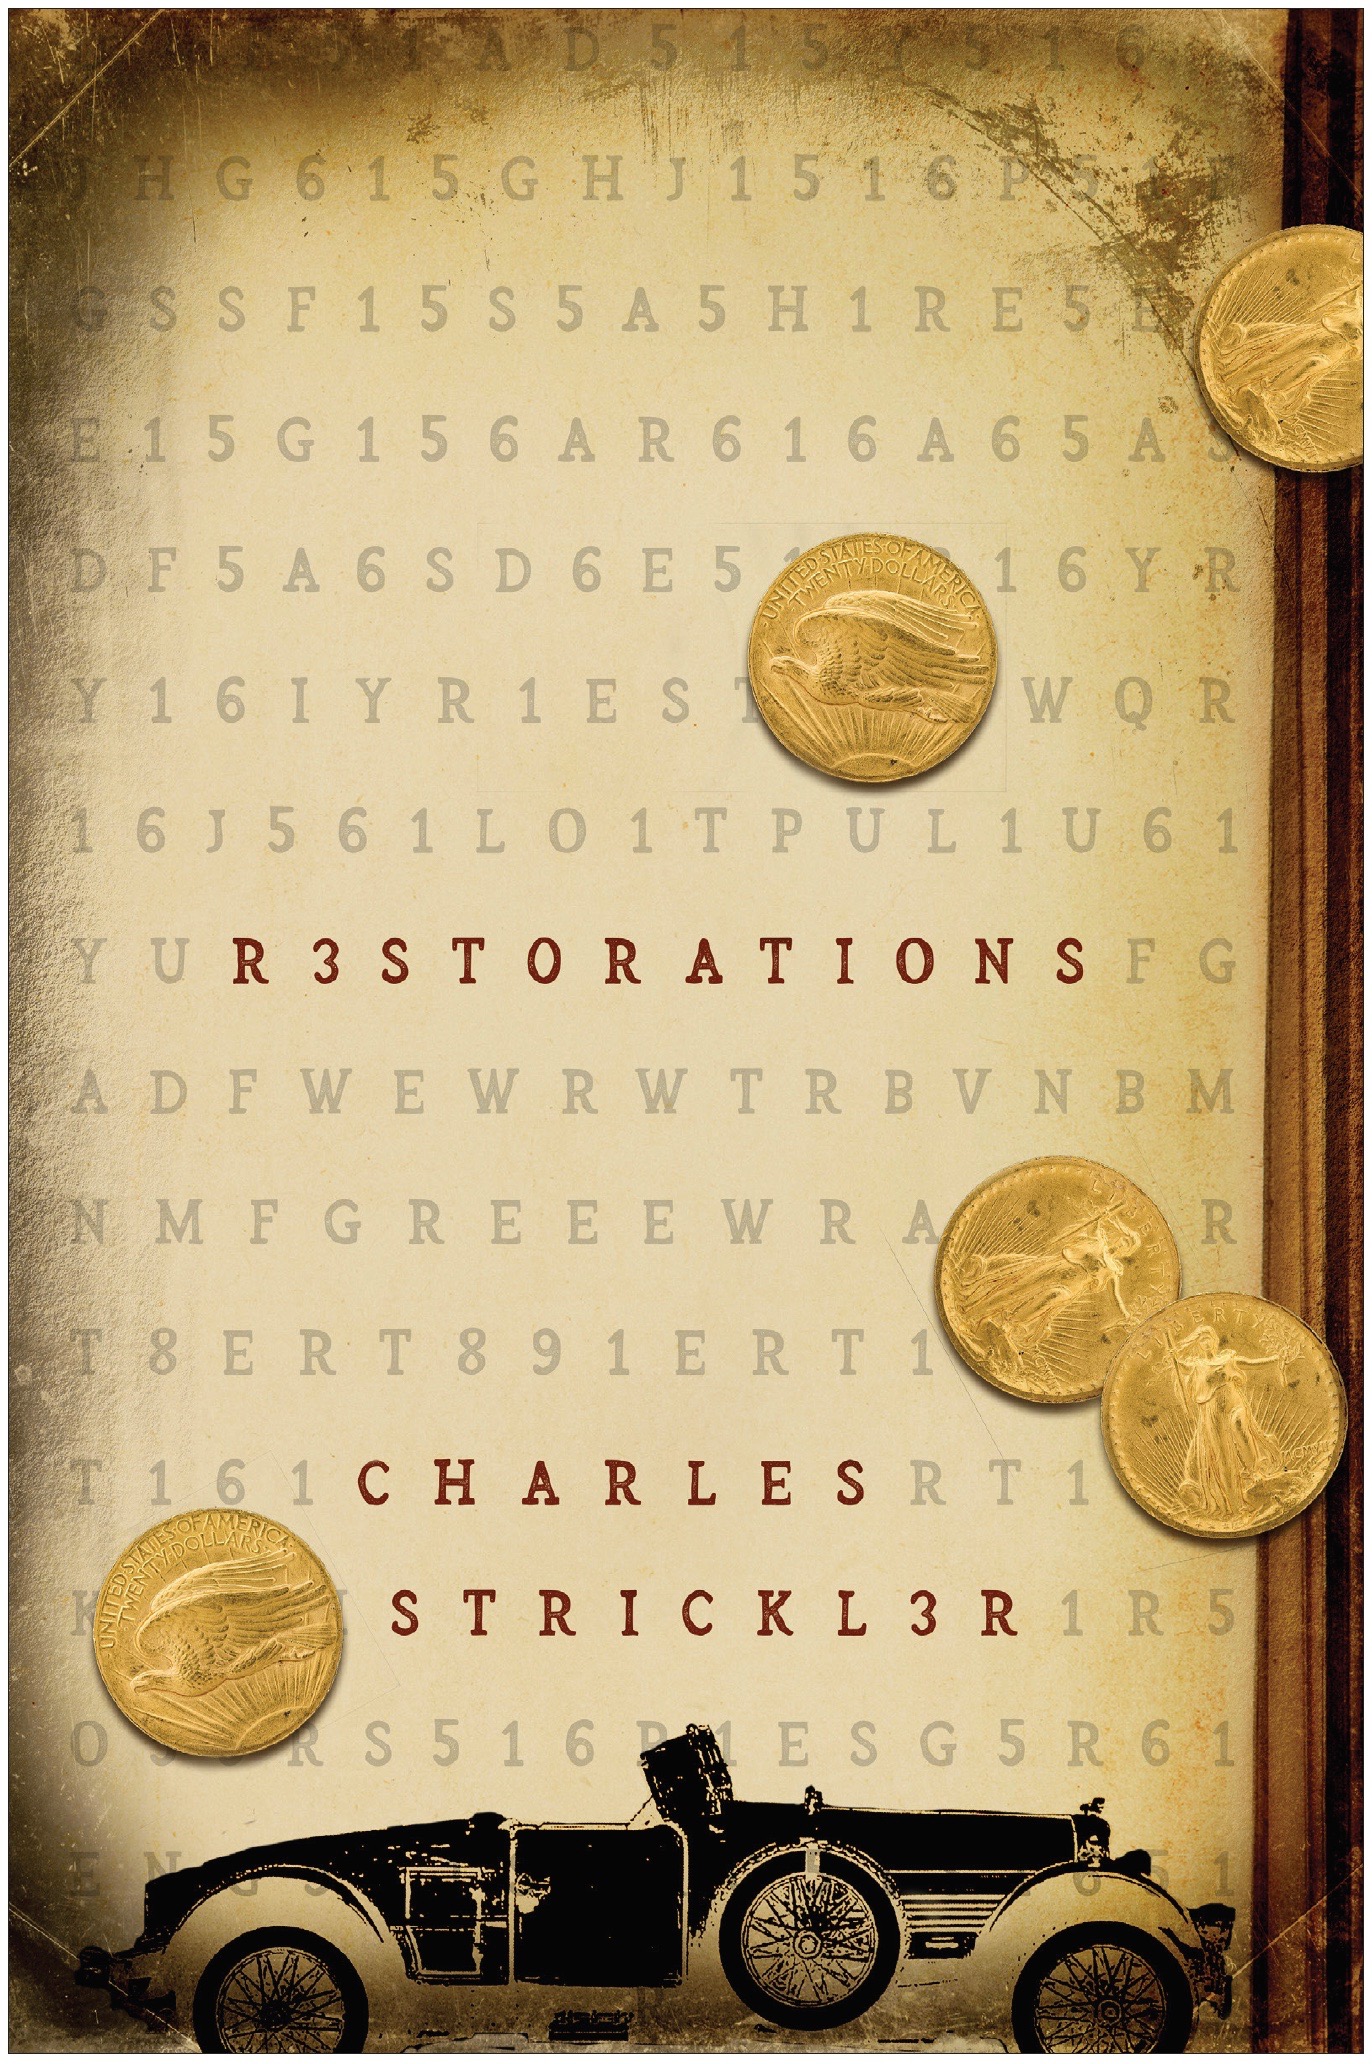 R3STORATION, Bookshelf: A novel approach to R3STORATION, ClassicCars.com Journal